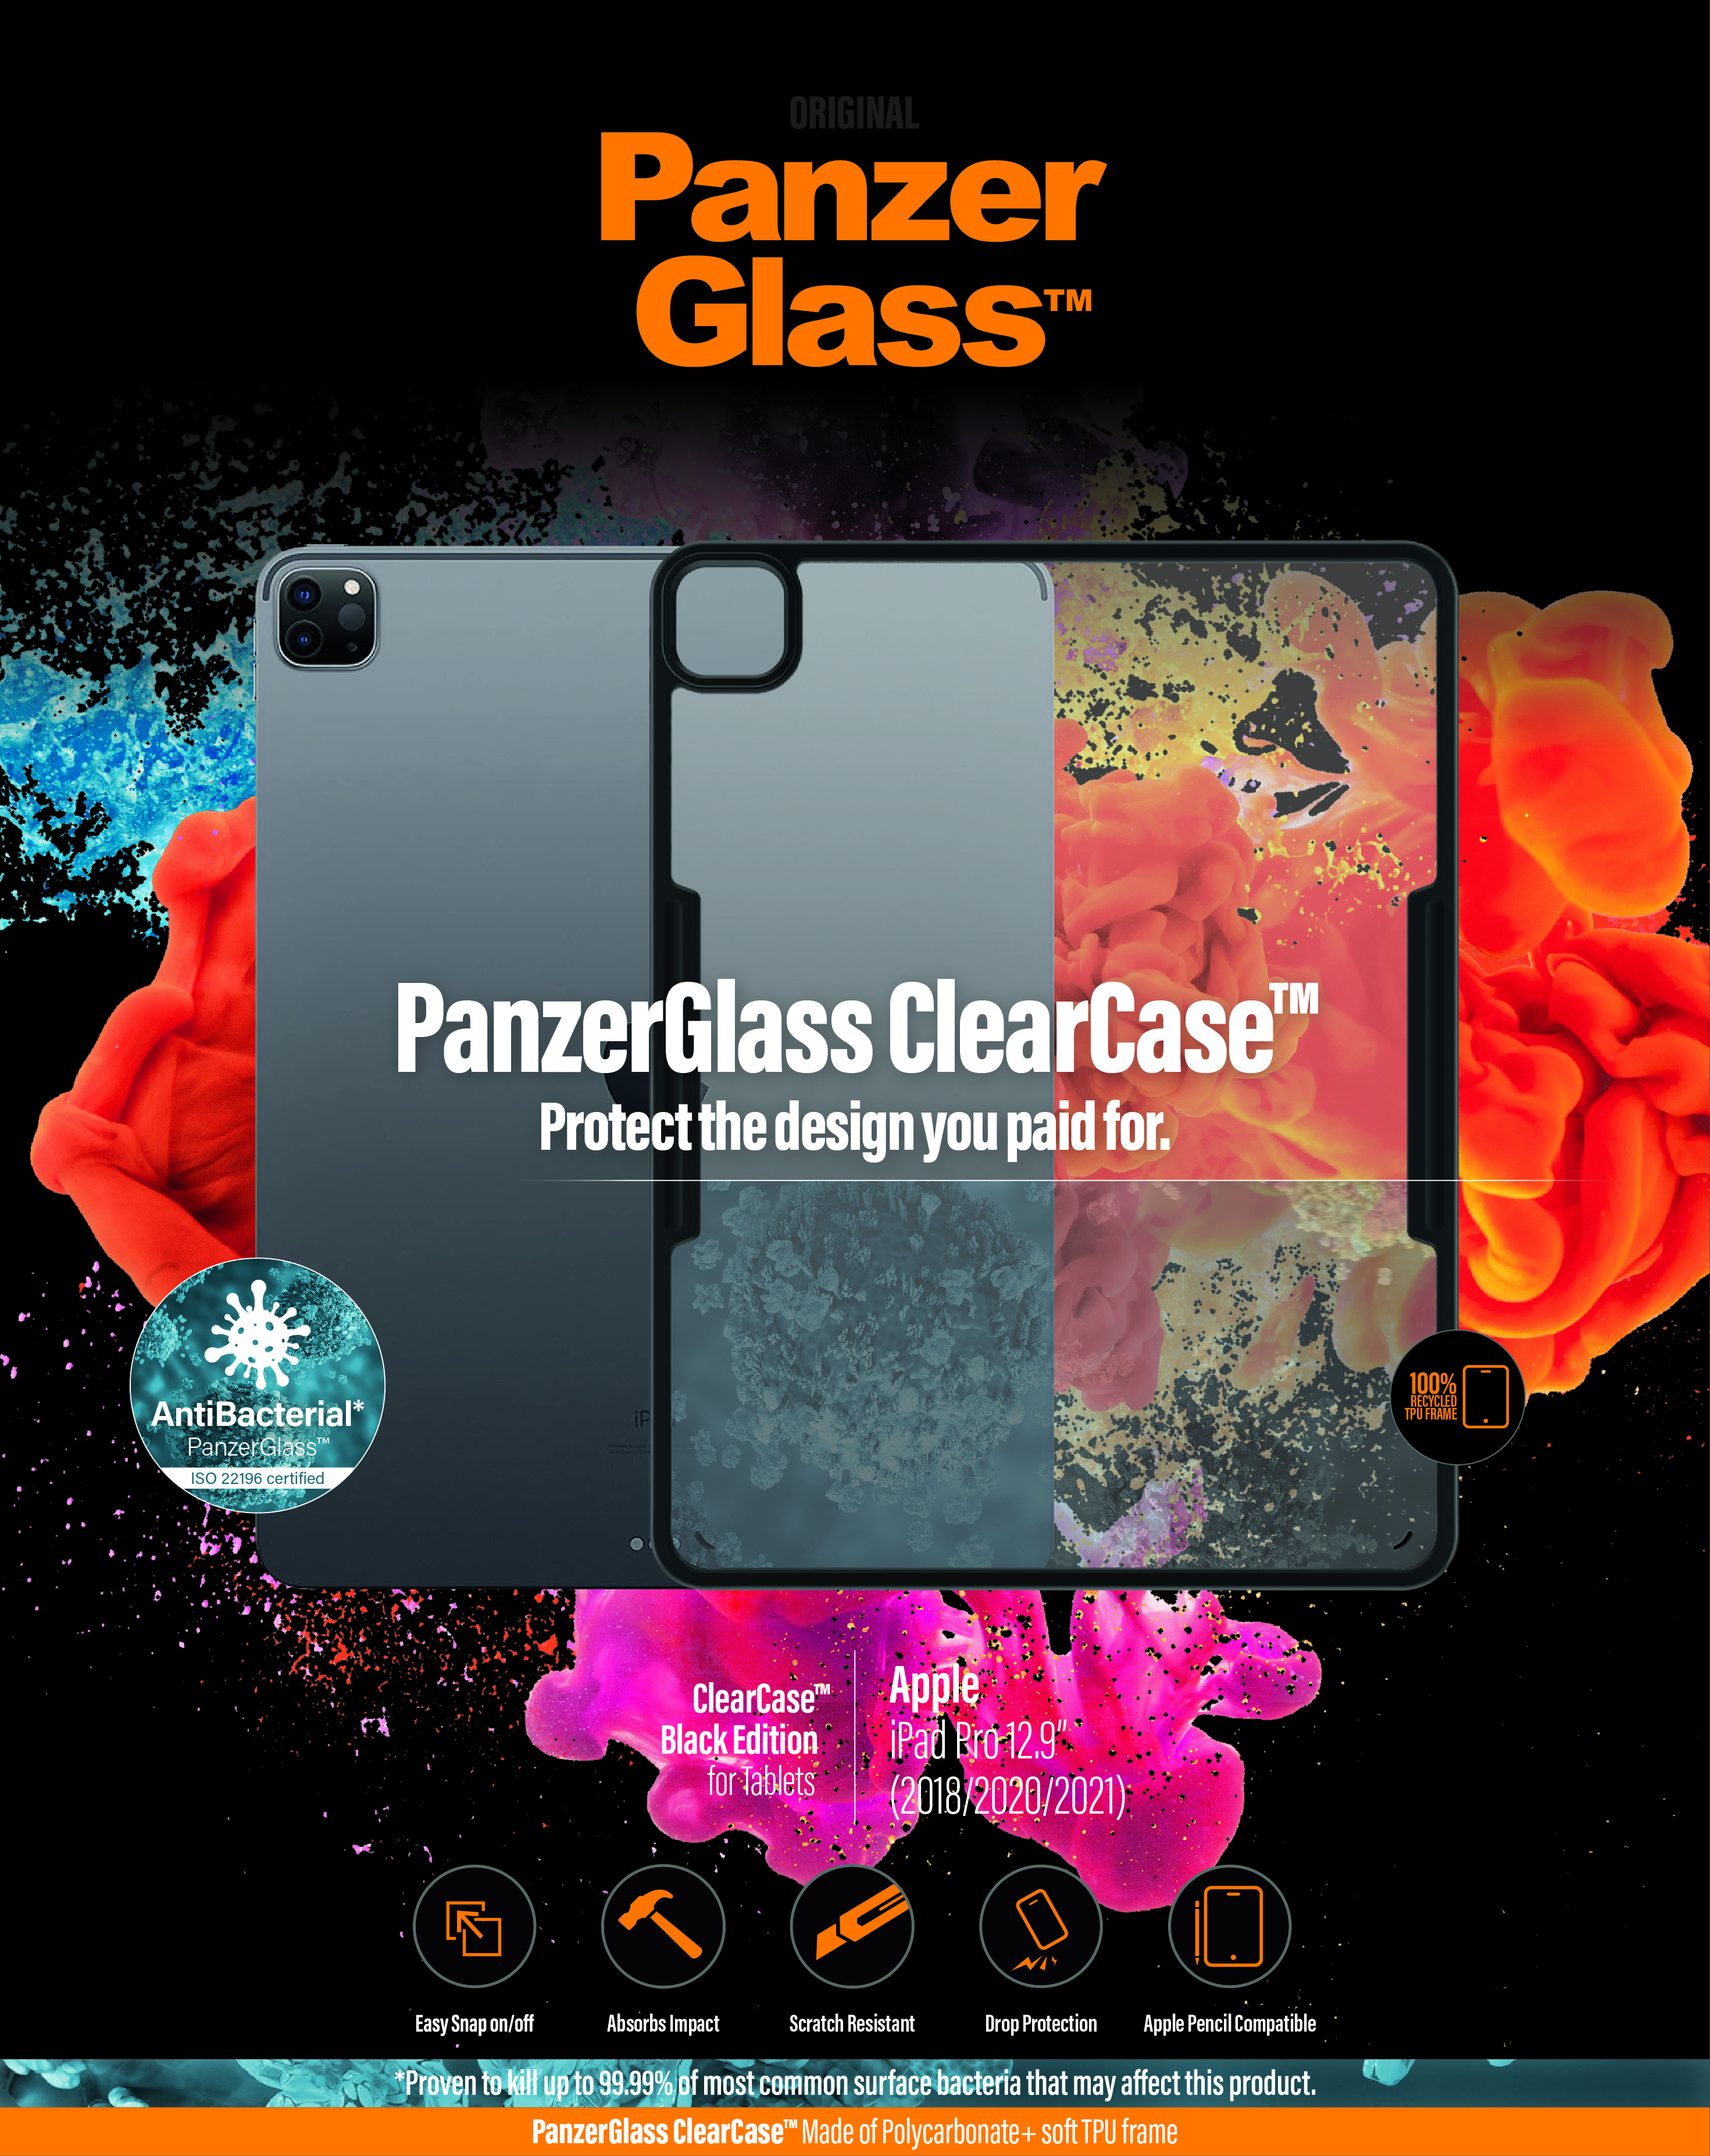 PanzerGlasstm ClearCasetm Apple iPad Pro 12 9″ (2018 | 2020 | 2021) thumb